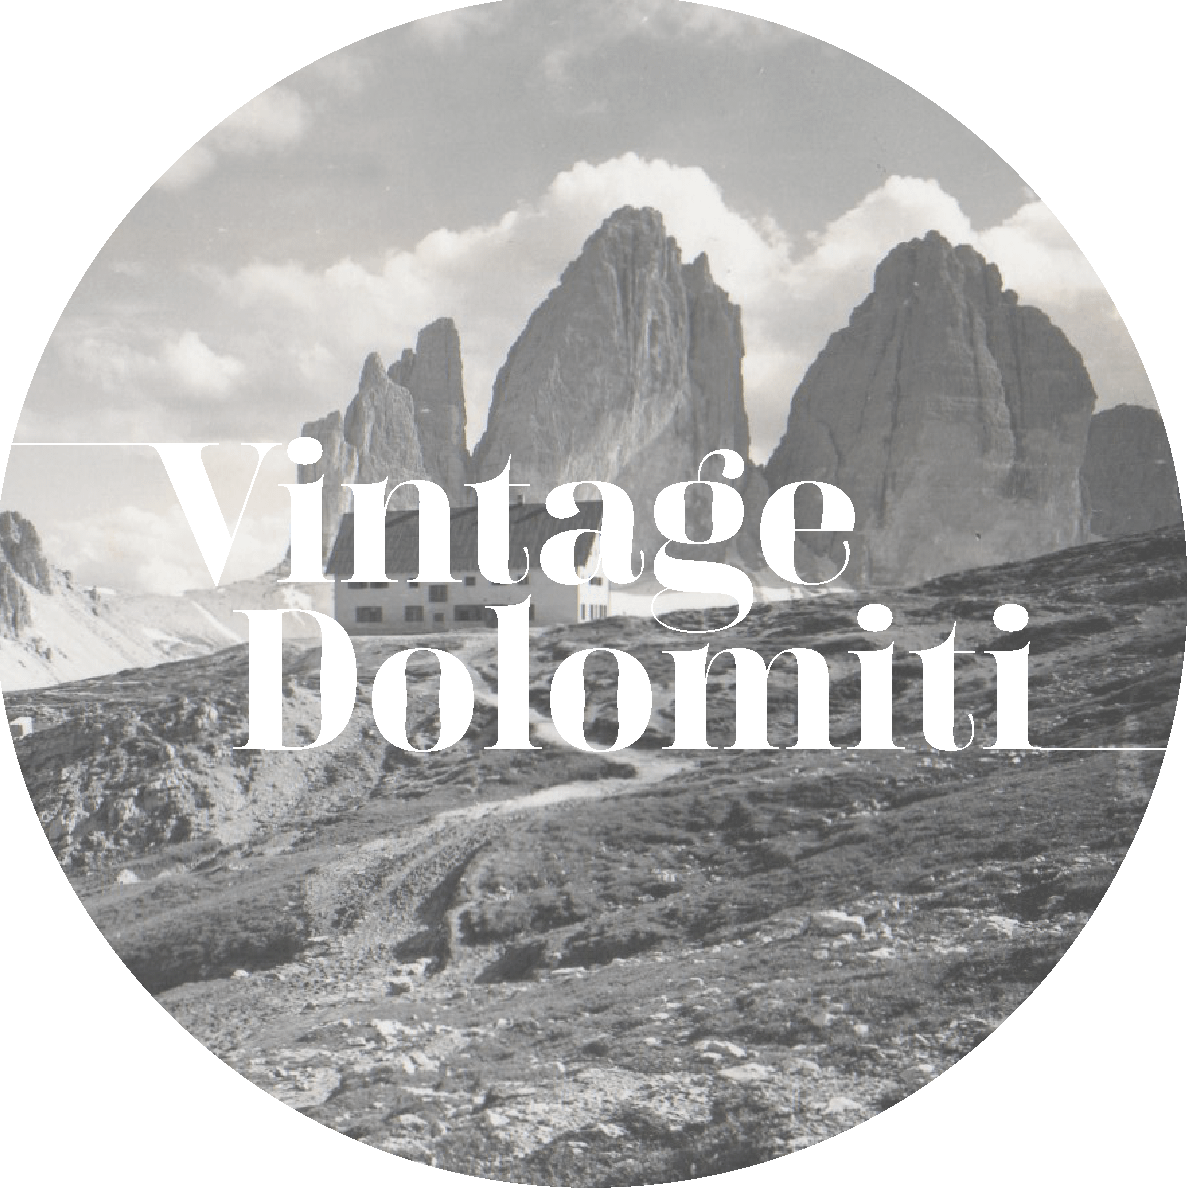 Explore the timeless beauty of the Dolomites with #VintageDolomiti